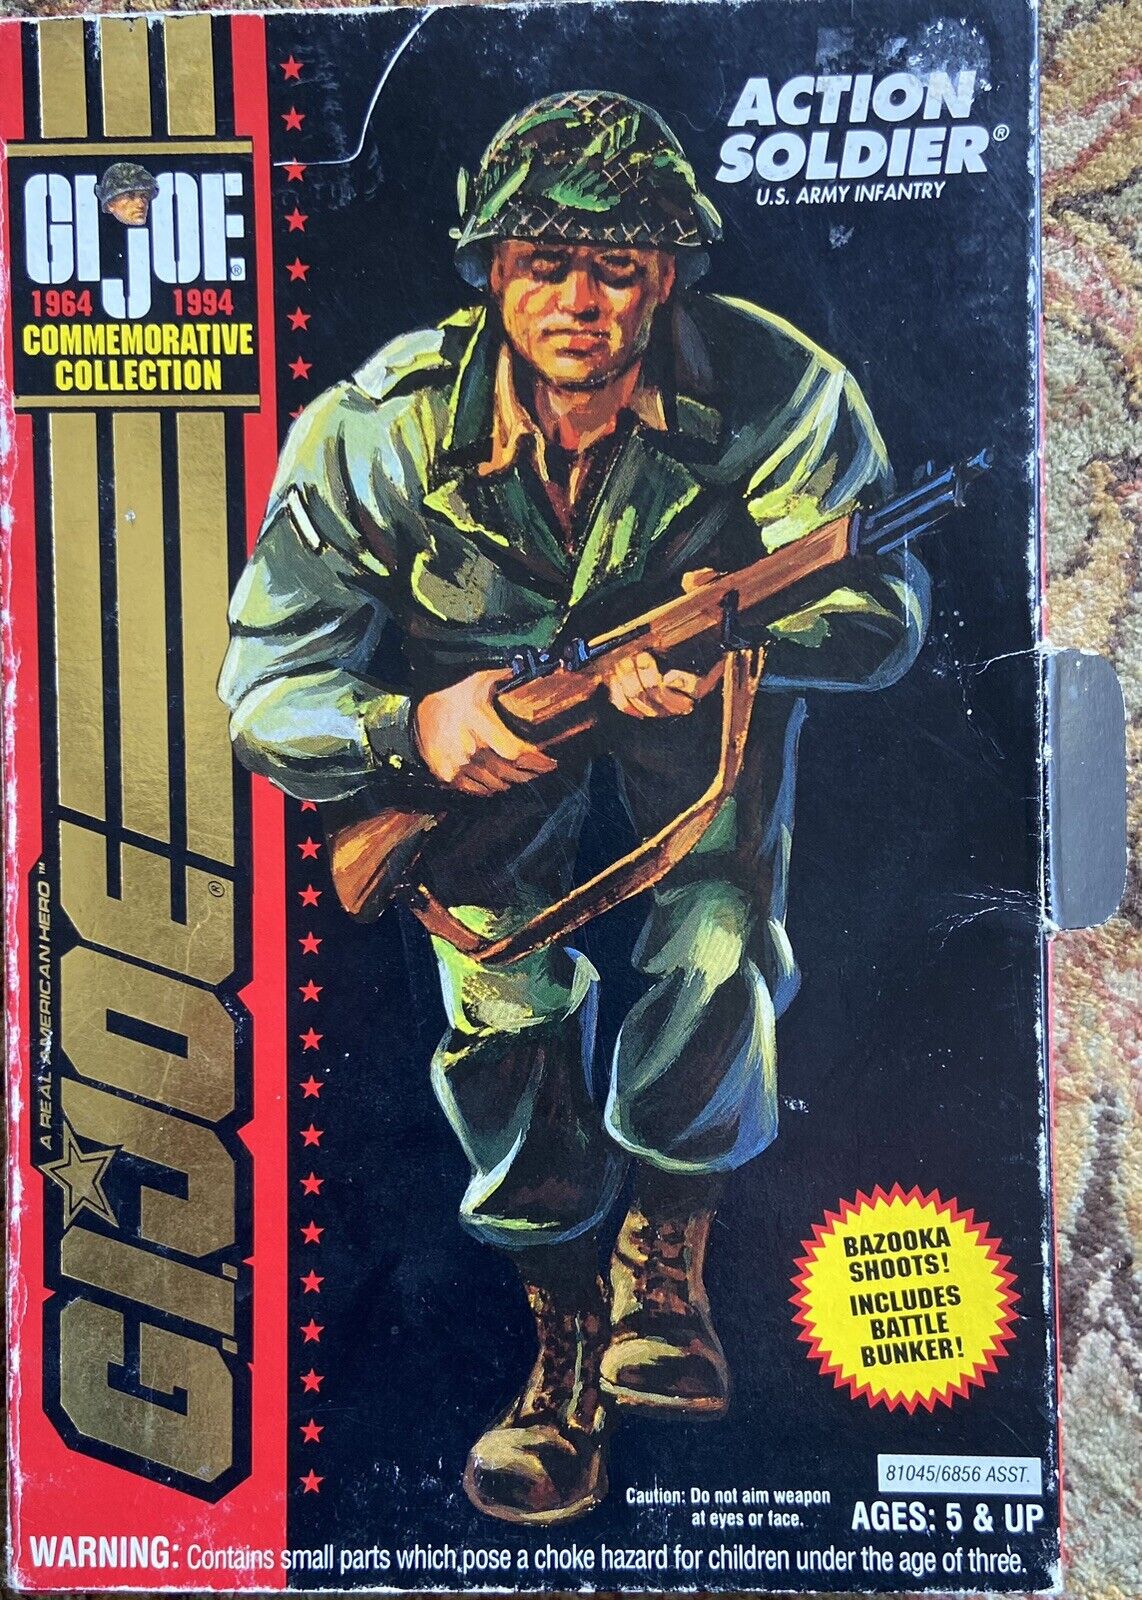 Hasbro GI Joe 1994 Commemorative Collection Action Soldier US Army Infantry NiB